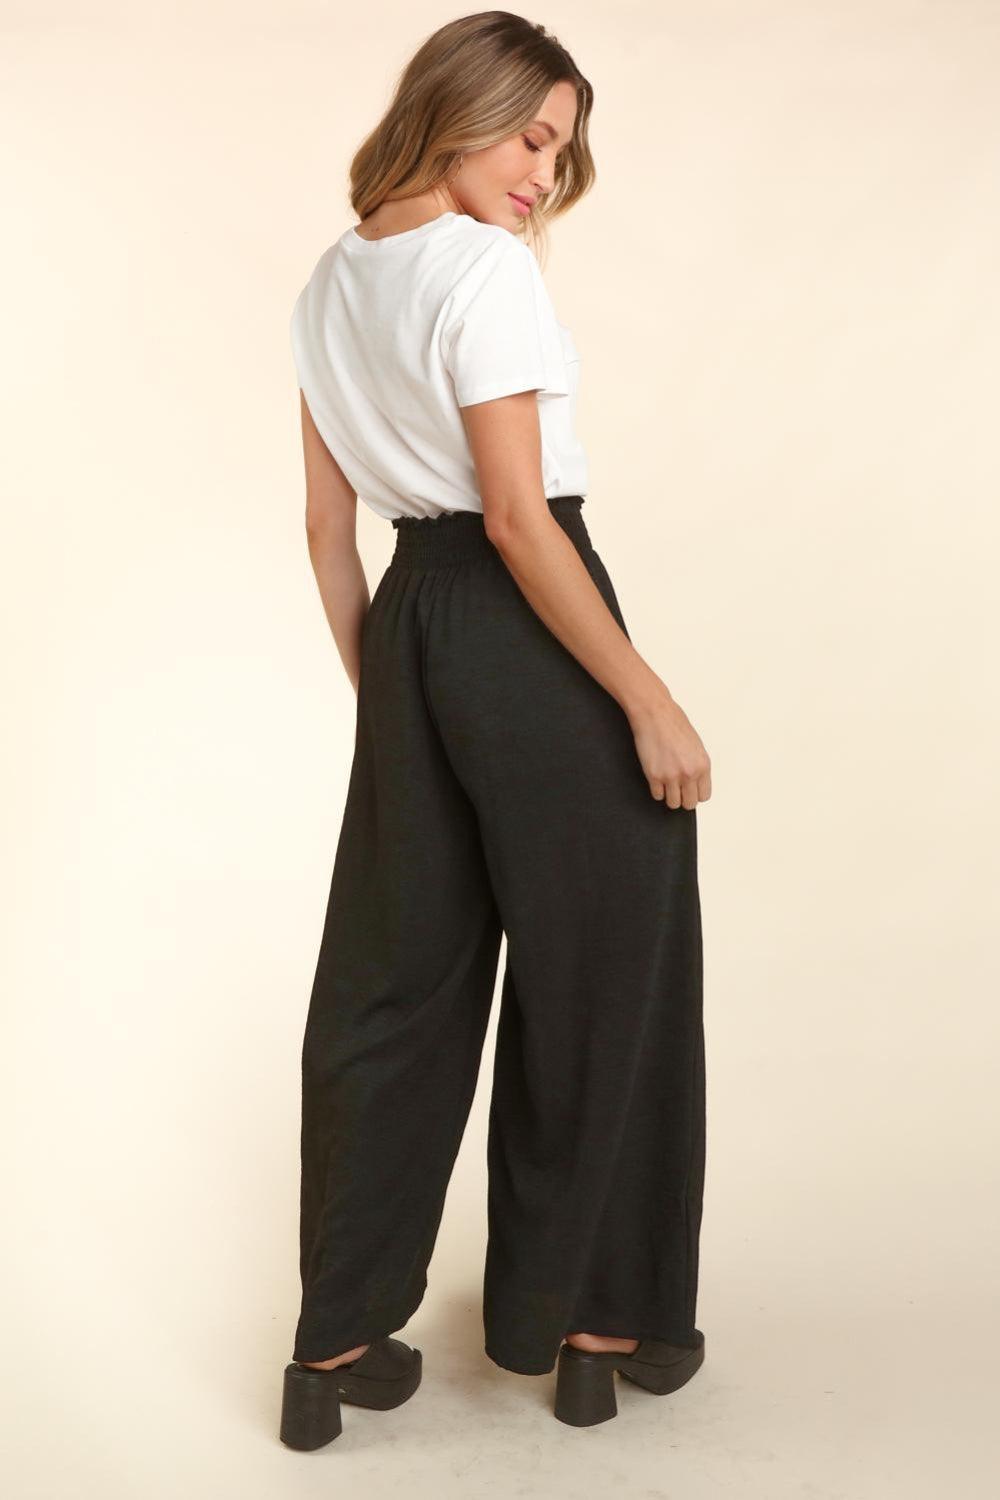 Haptics Elastic Waist Wide Leg Pants with Pockets in Black for Women